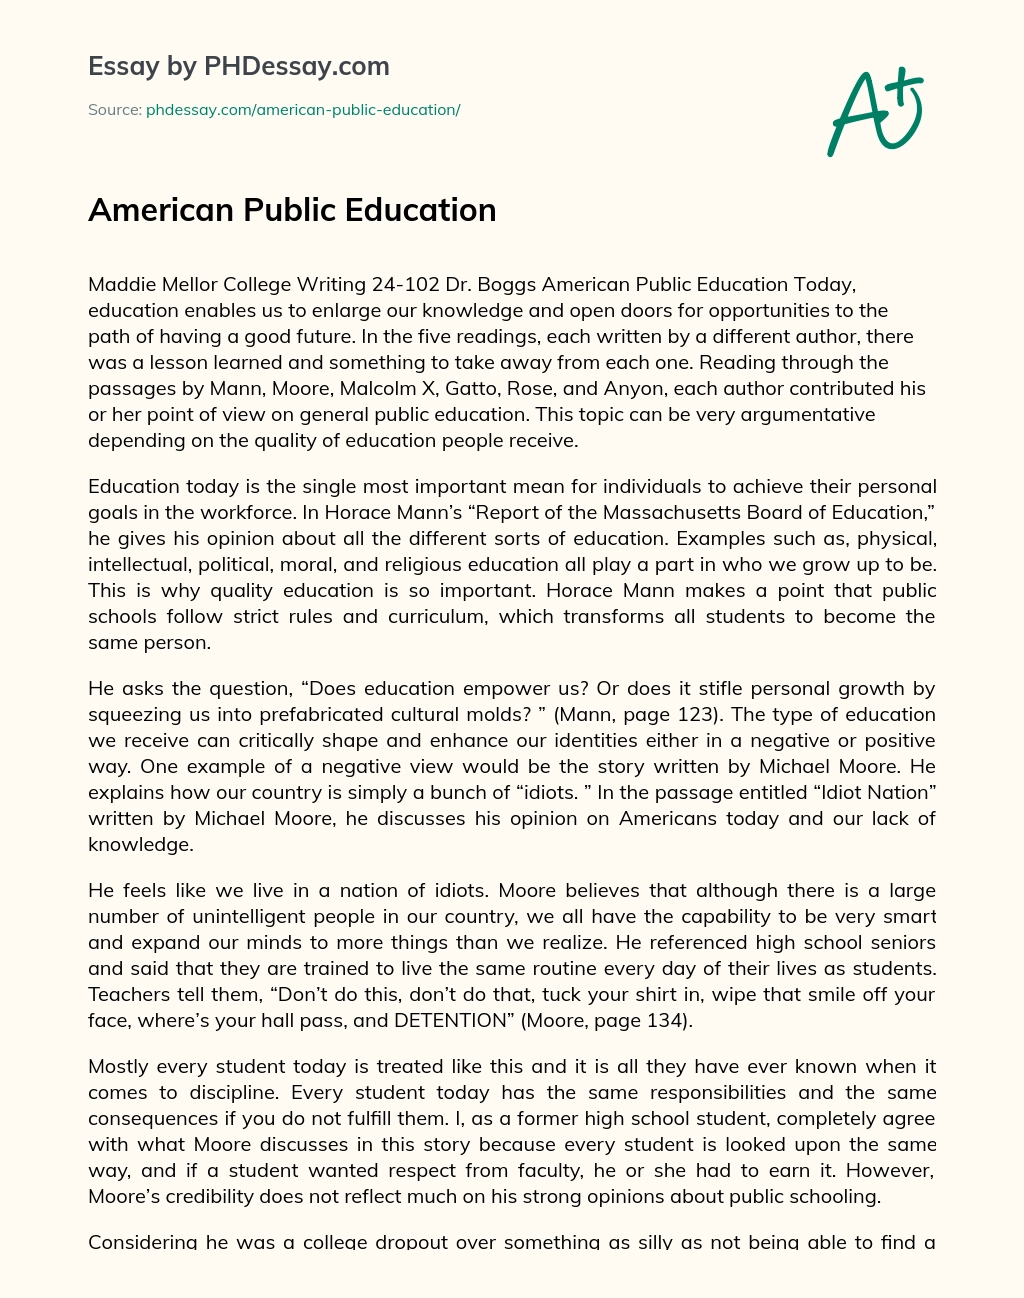 American Public Education essay